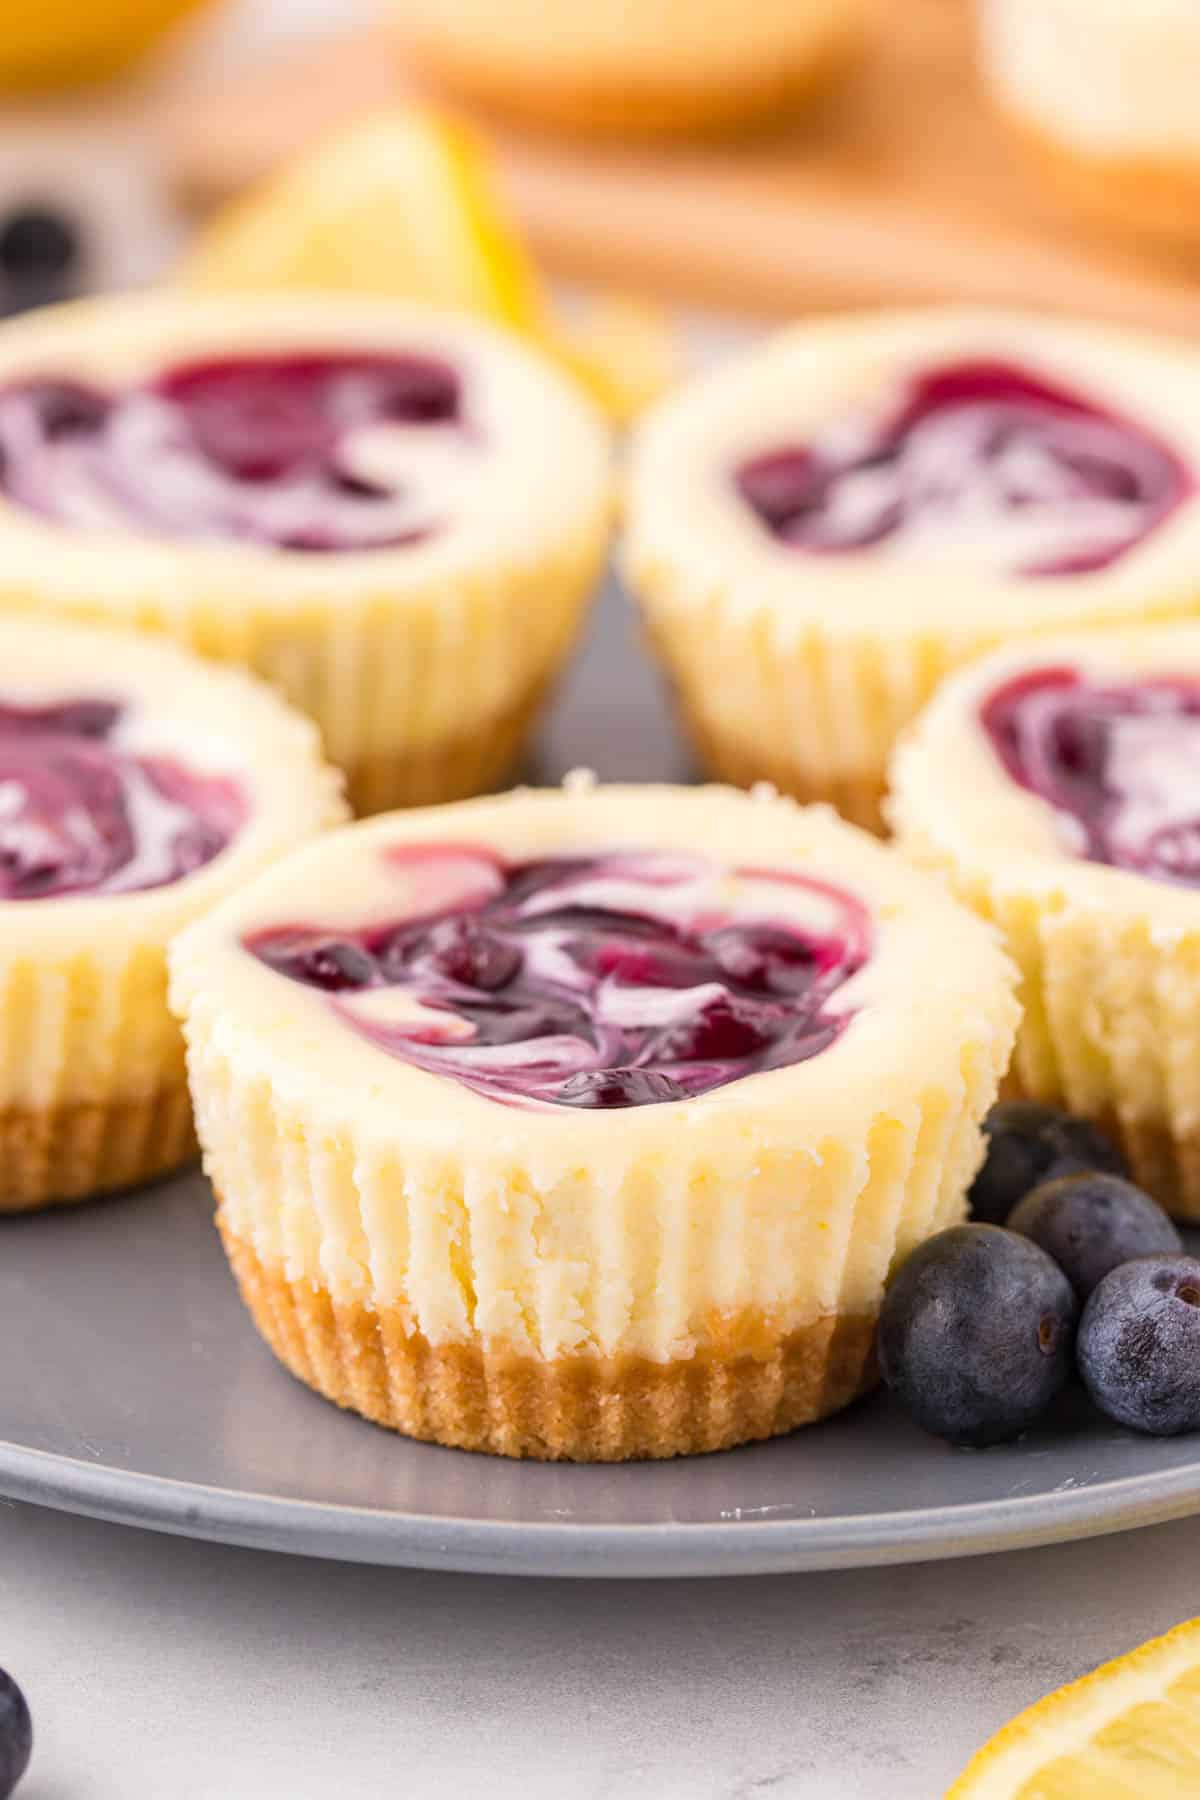 Mini lemon blueberry cheesecakes on a plate.